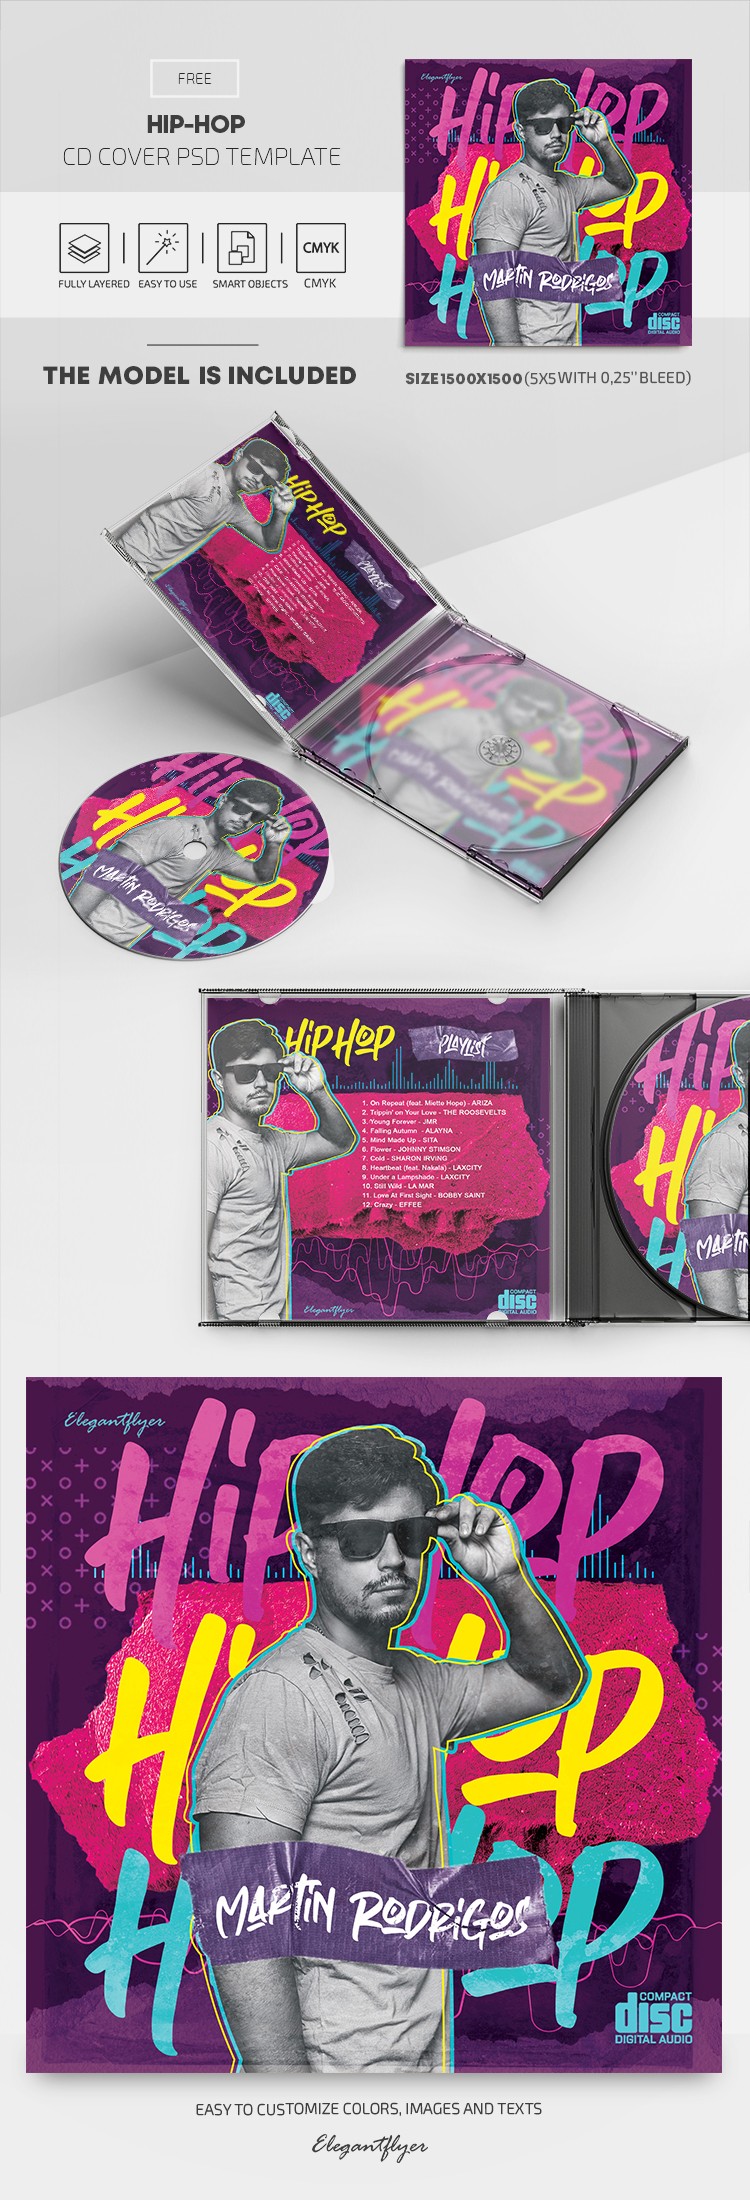 Portada de CD de Hip Hop by ElegantFlyer